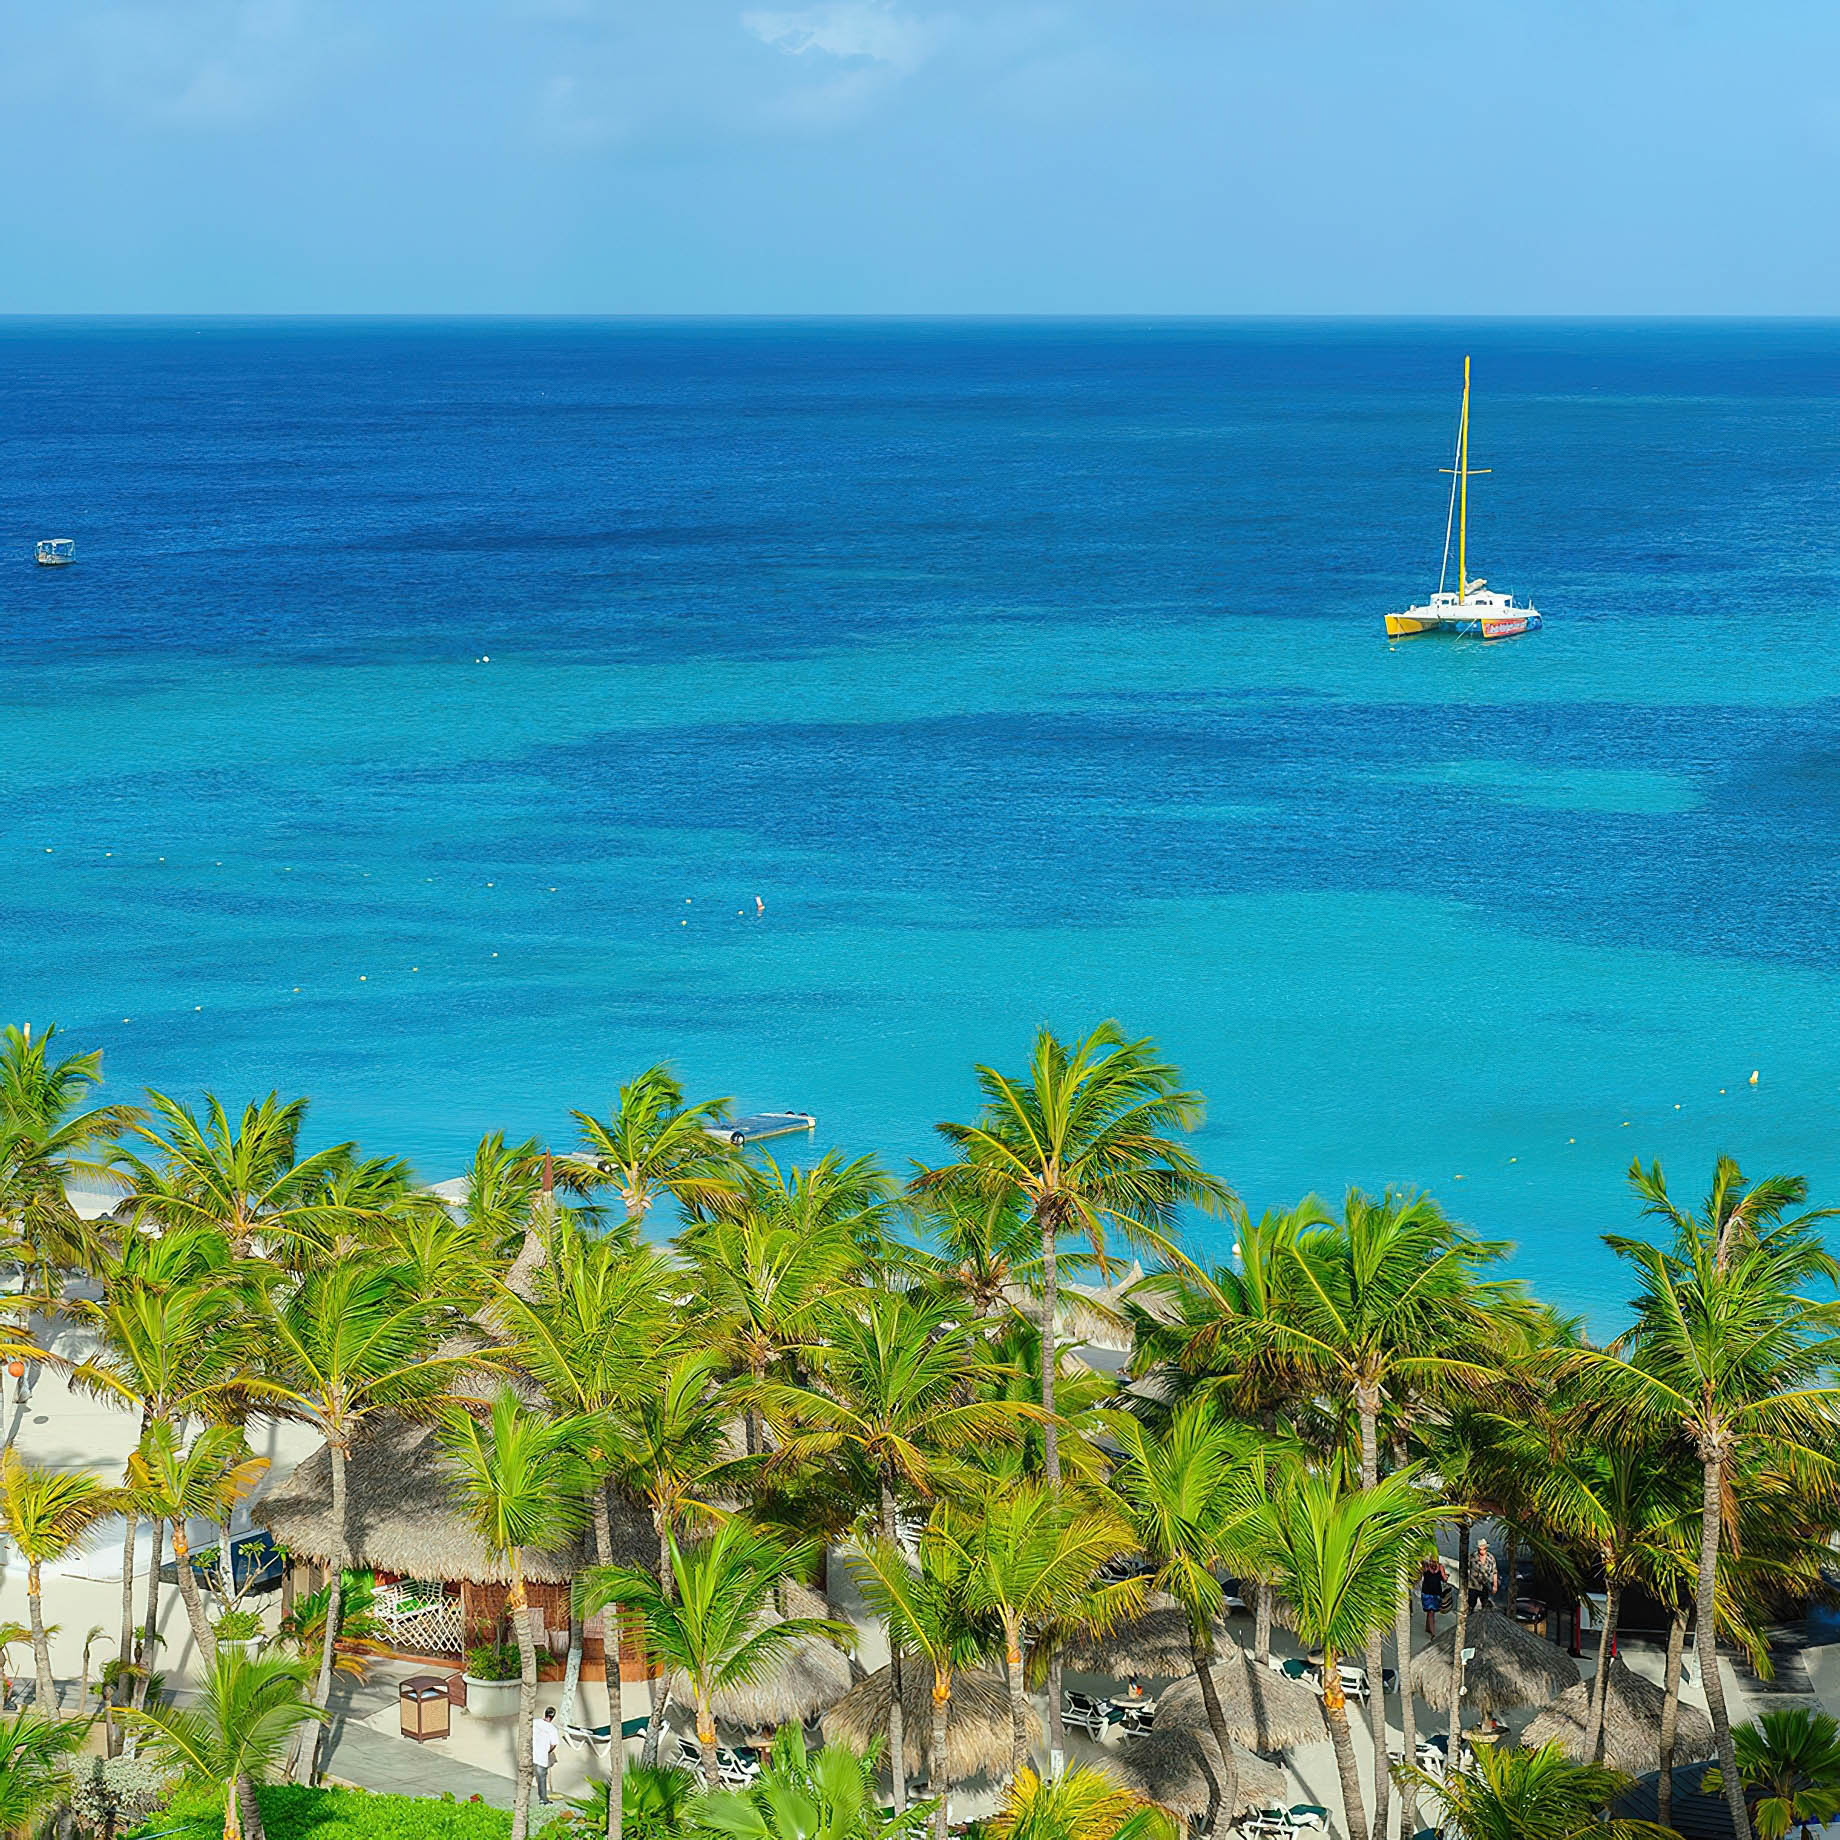 Barceló Aruba Palm Beach Resort - Noord, Aruba - Beach Resort Aerial View